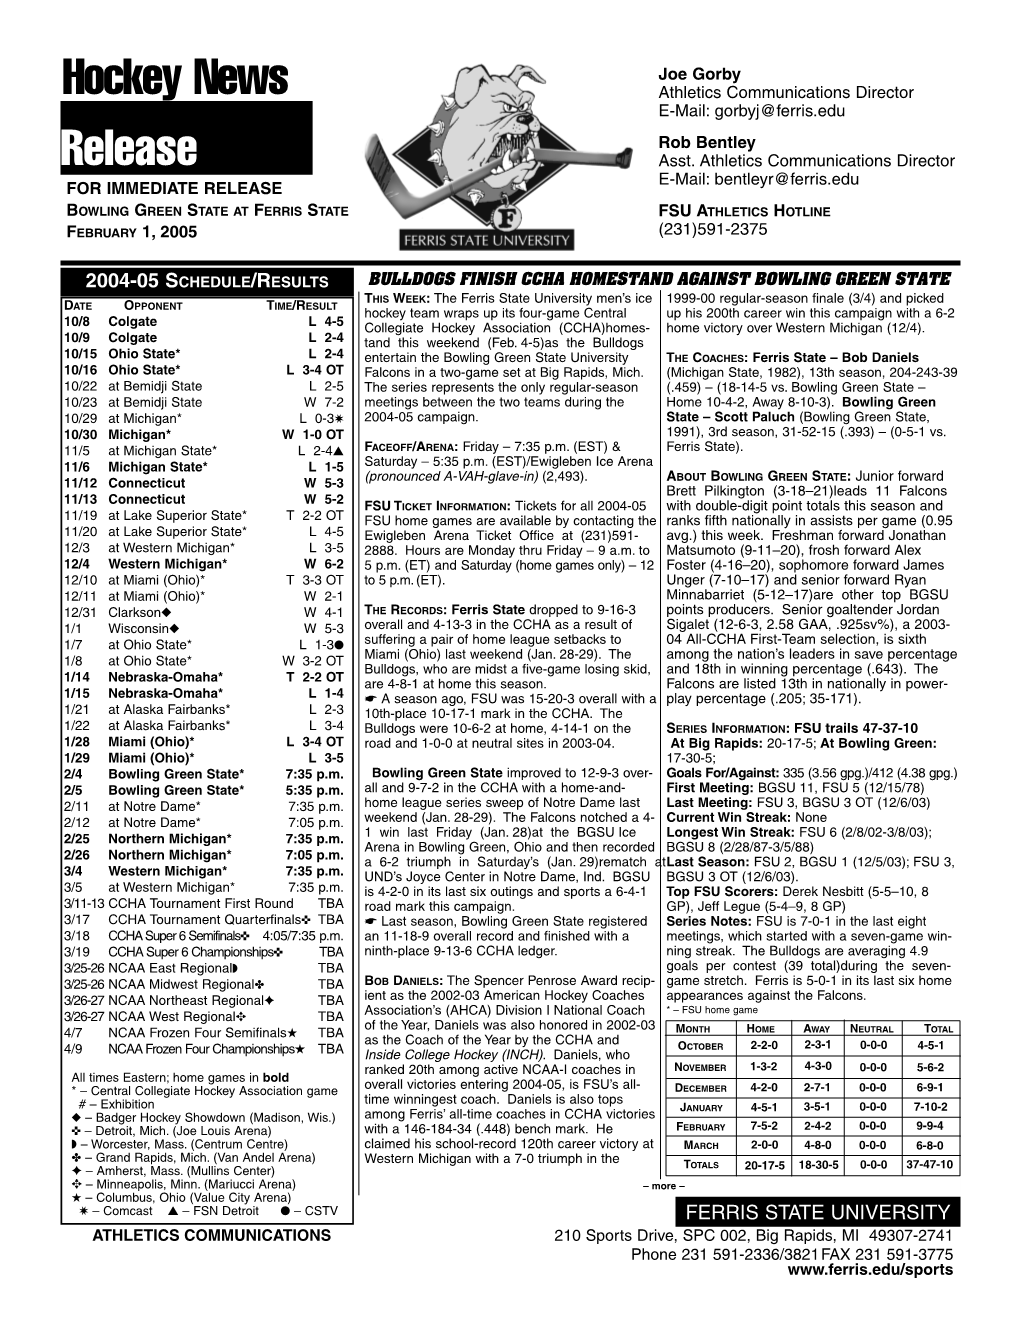 Bowling Green State at Ferris State Fsu Athletics Hotline February 1, 2005 (231)591-2375